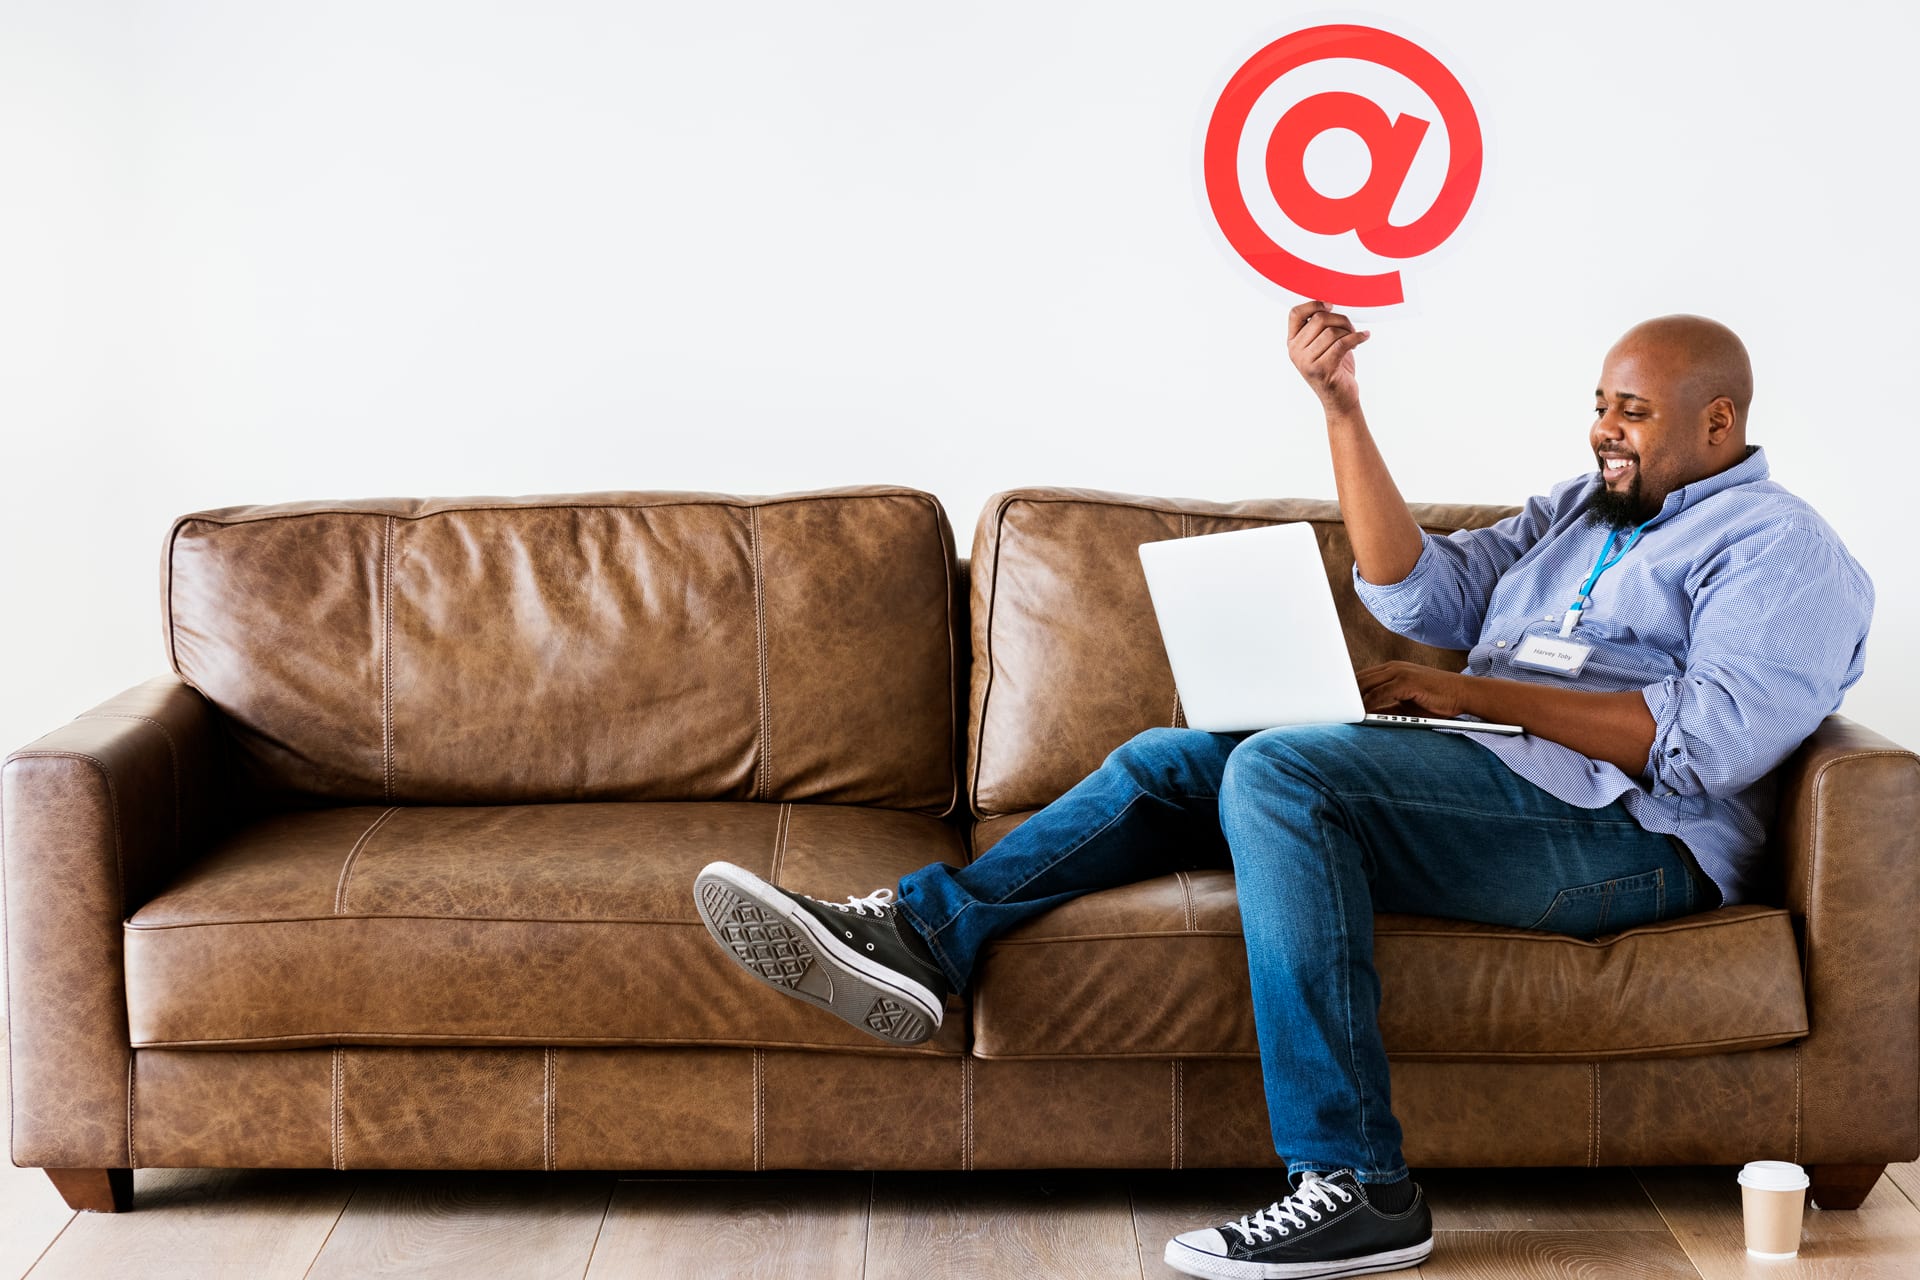 7 Common-Sense Email Marketing Tips